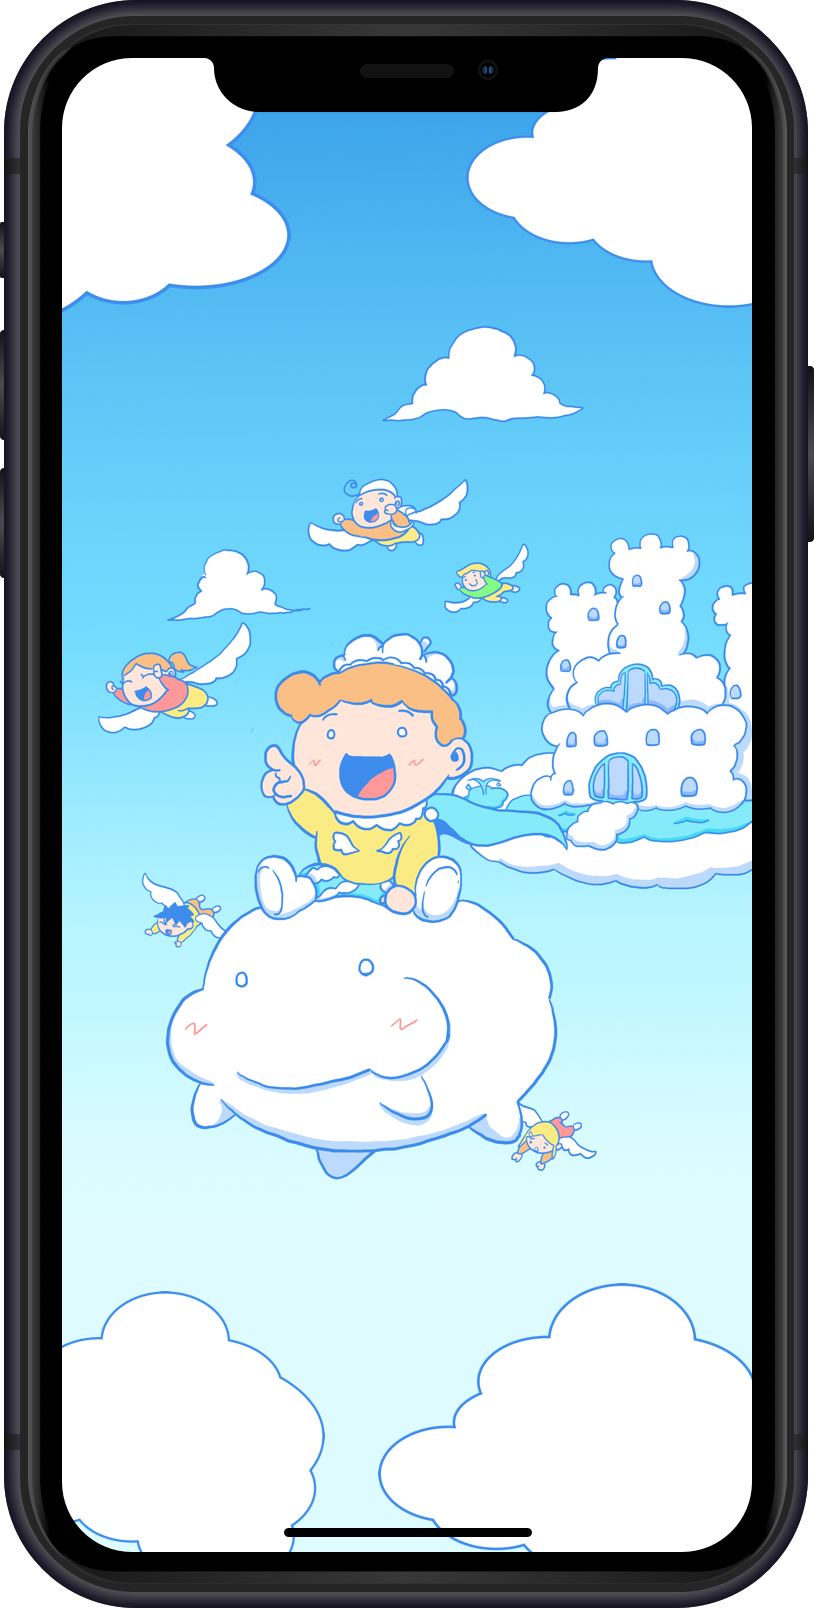 Kumoncho fairy tale book app